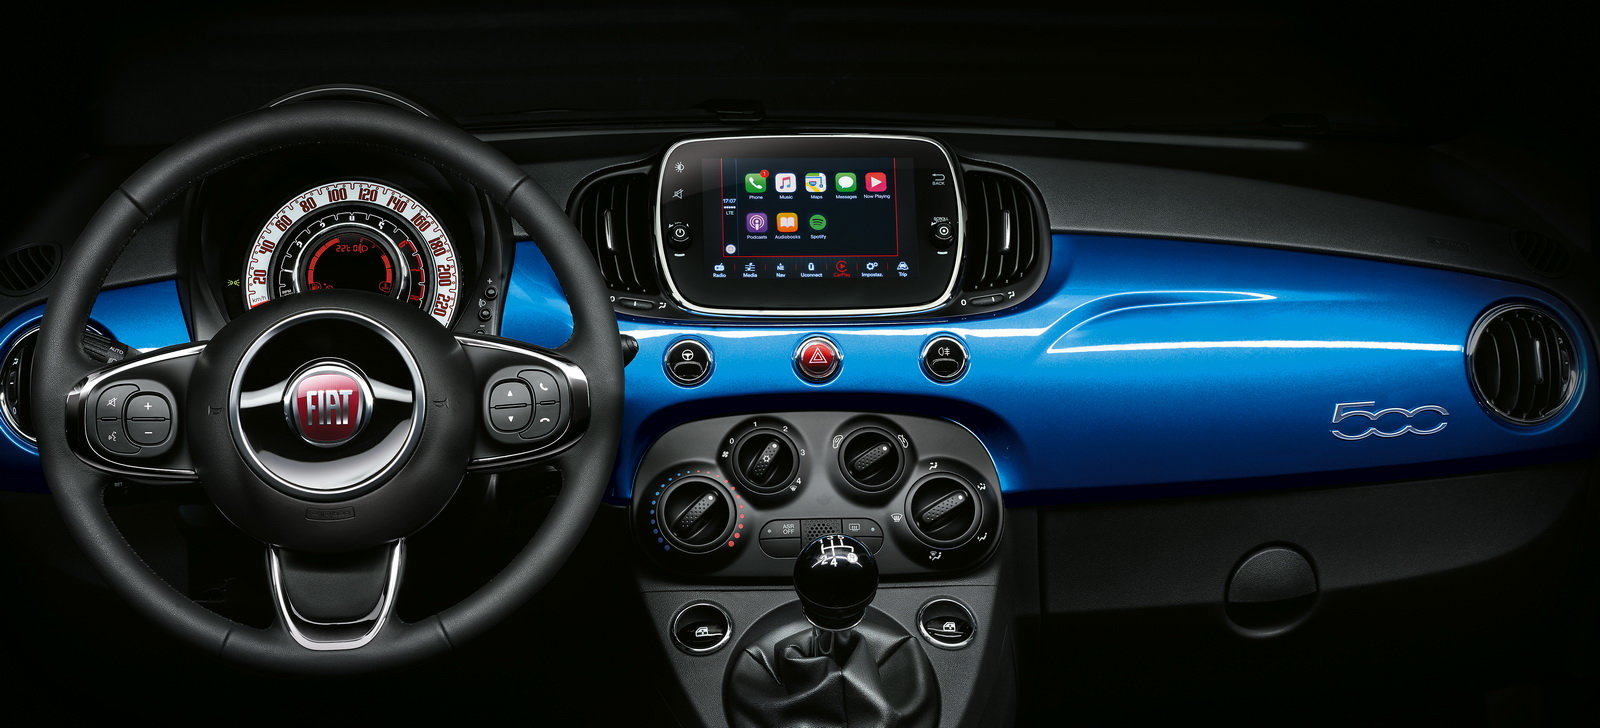 Fiat 500 Mirror: arrivano Apple Car Play e Android Auto 